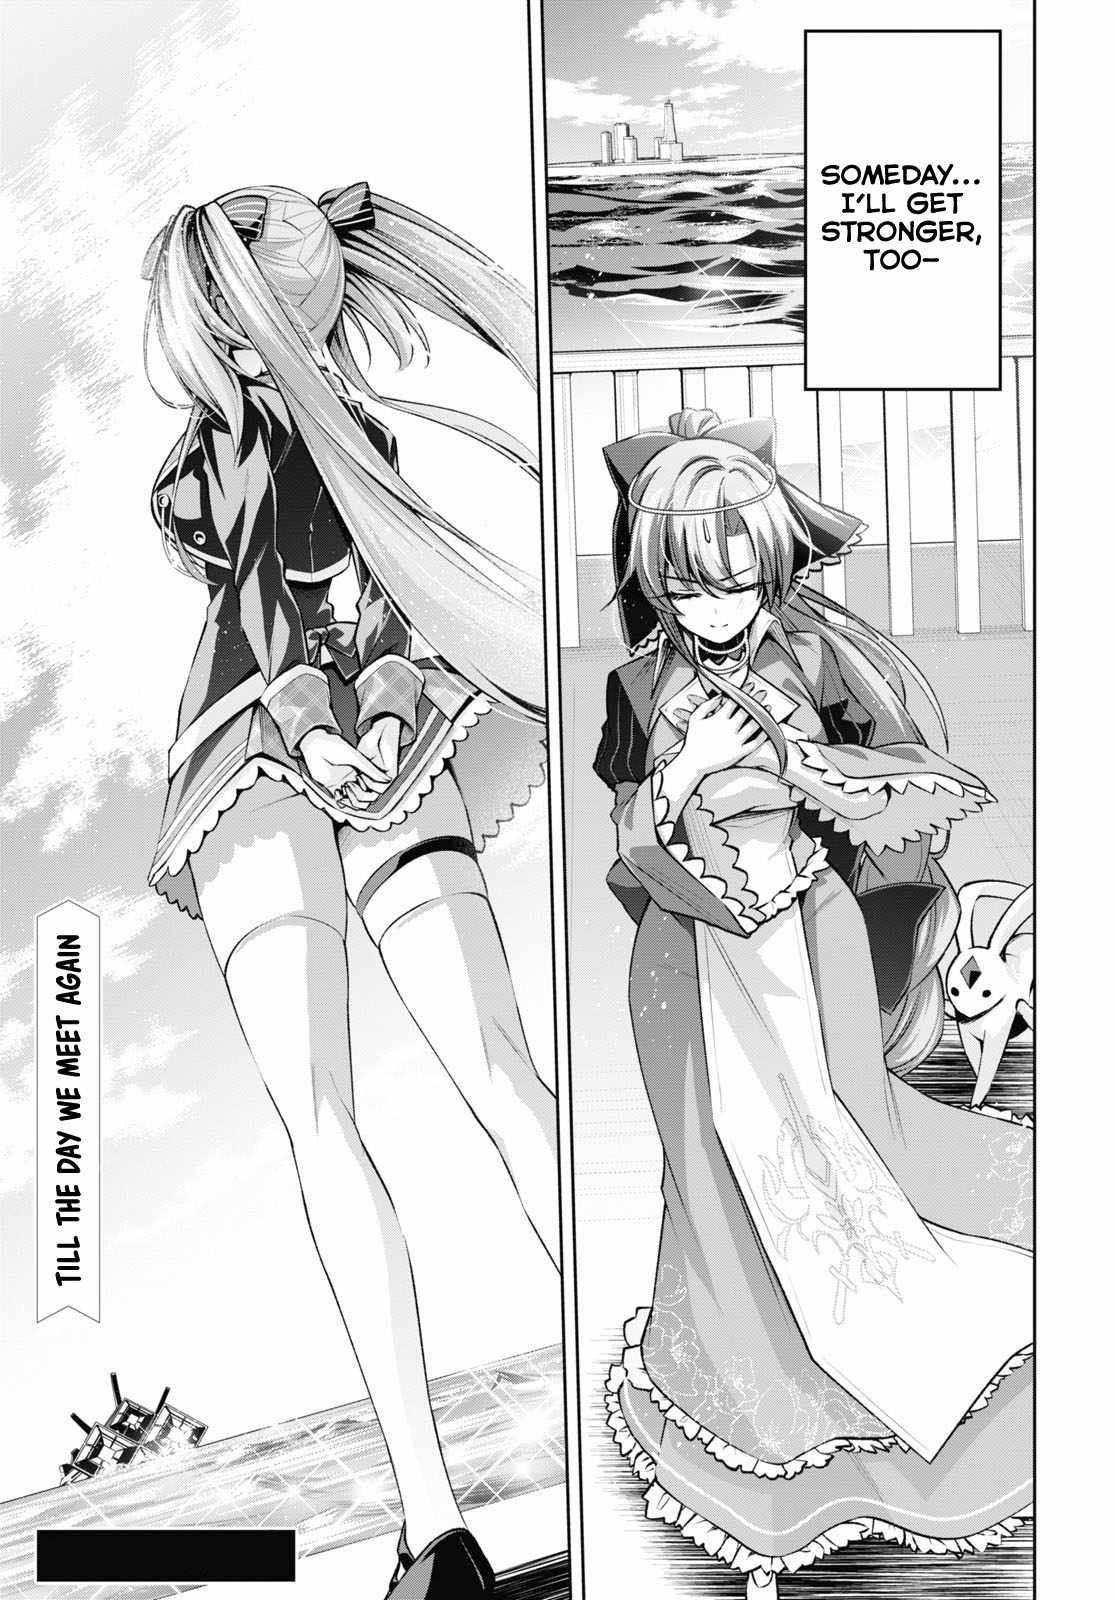 Demon's Sword Master Of Excalibur School - 20 page 30-01cce746